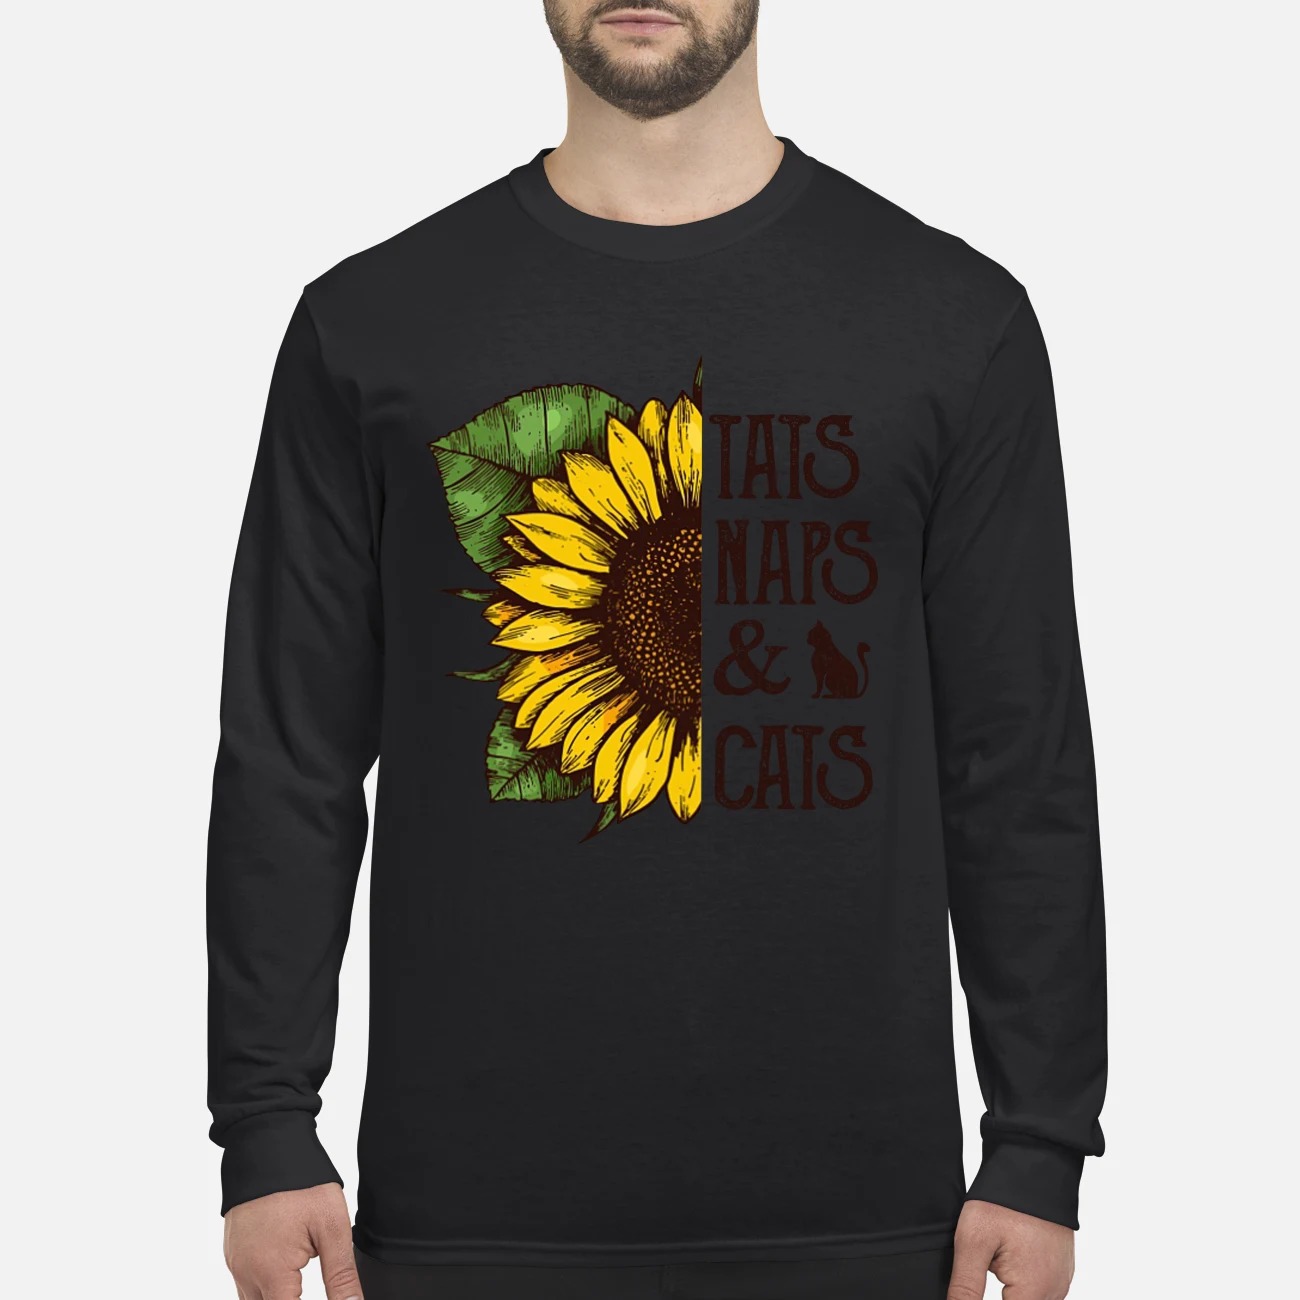 Sunflower Tats naps and cats men's long sleeved shirt